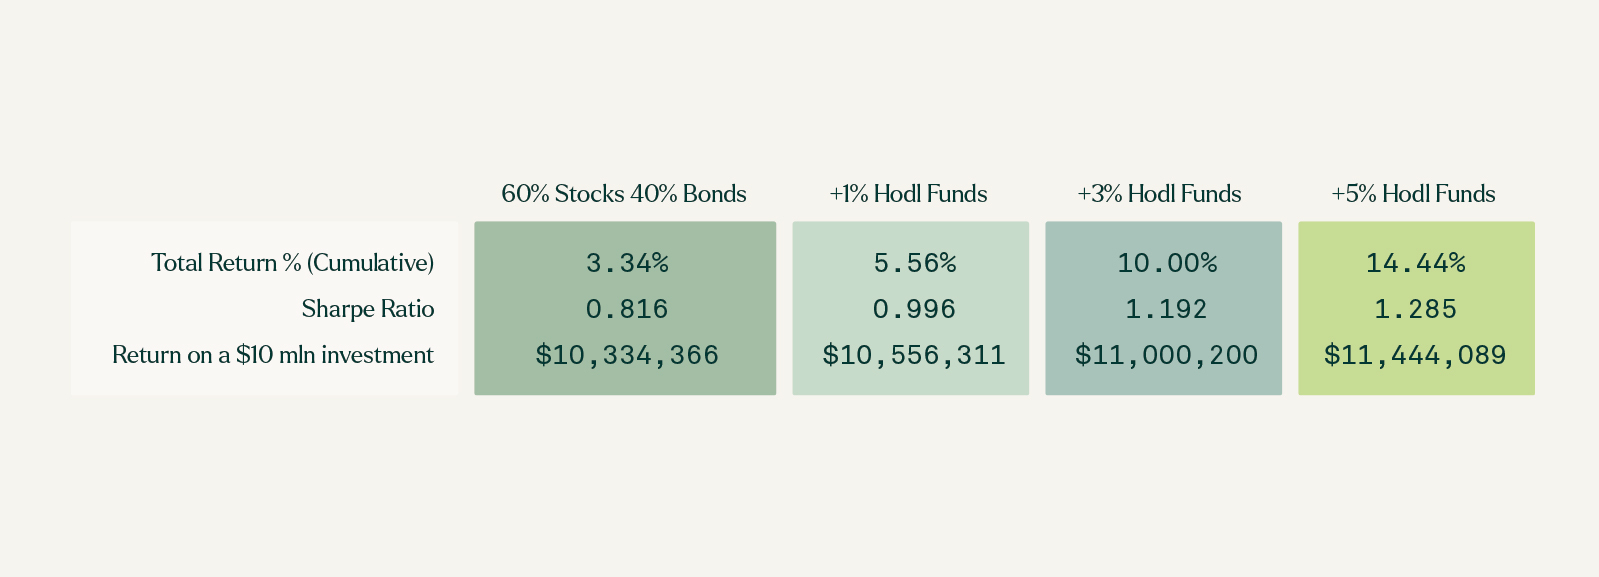 Table of the 60% stock and 40% bonds portfolio